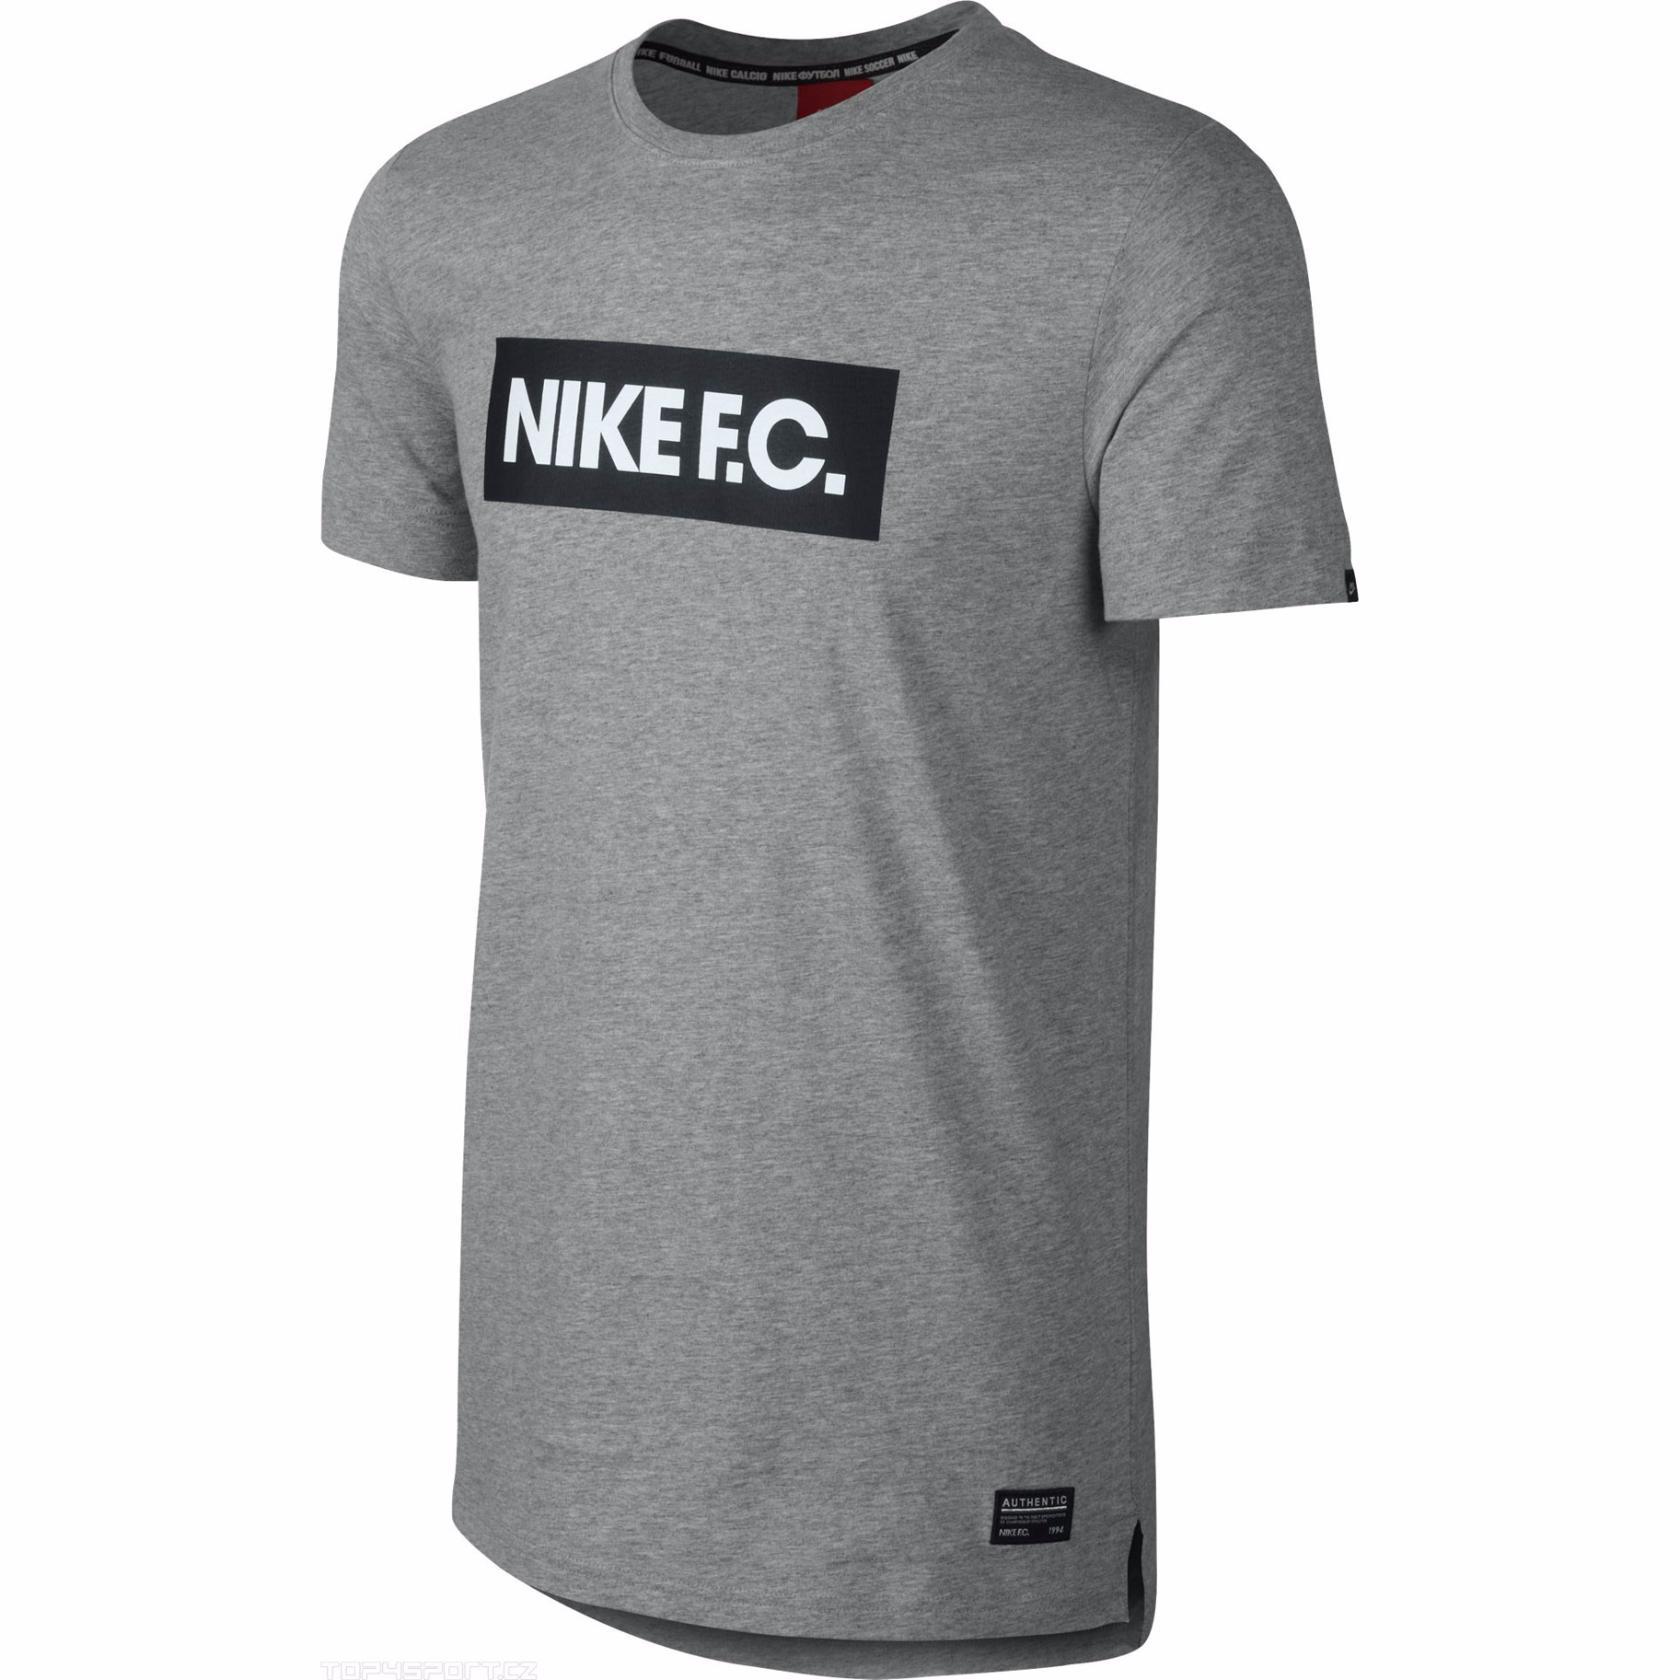 Nike Bangladesh T-shirt original - buy in bulk on Qoovee Market